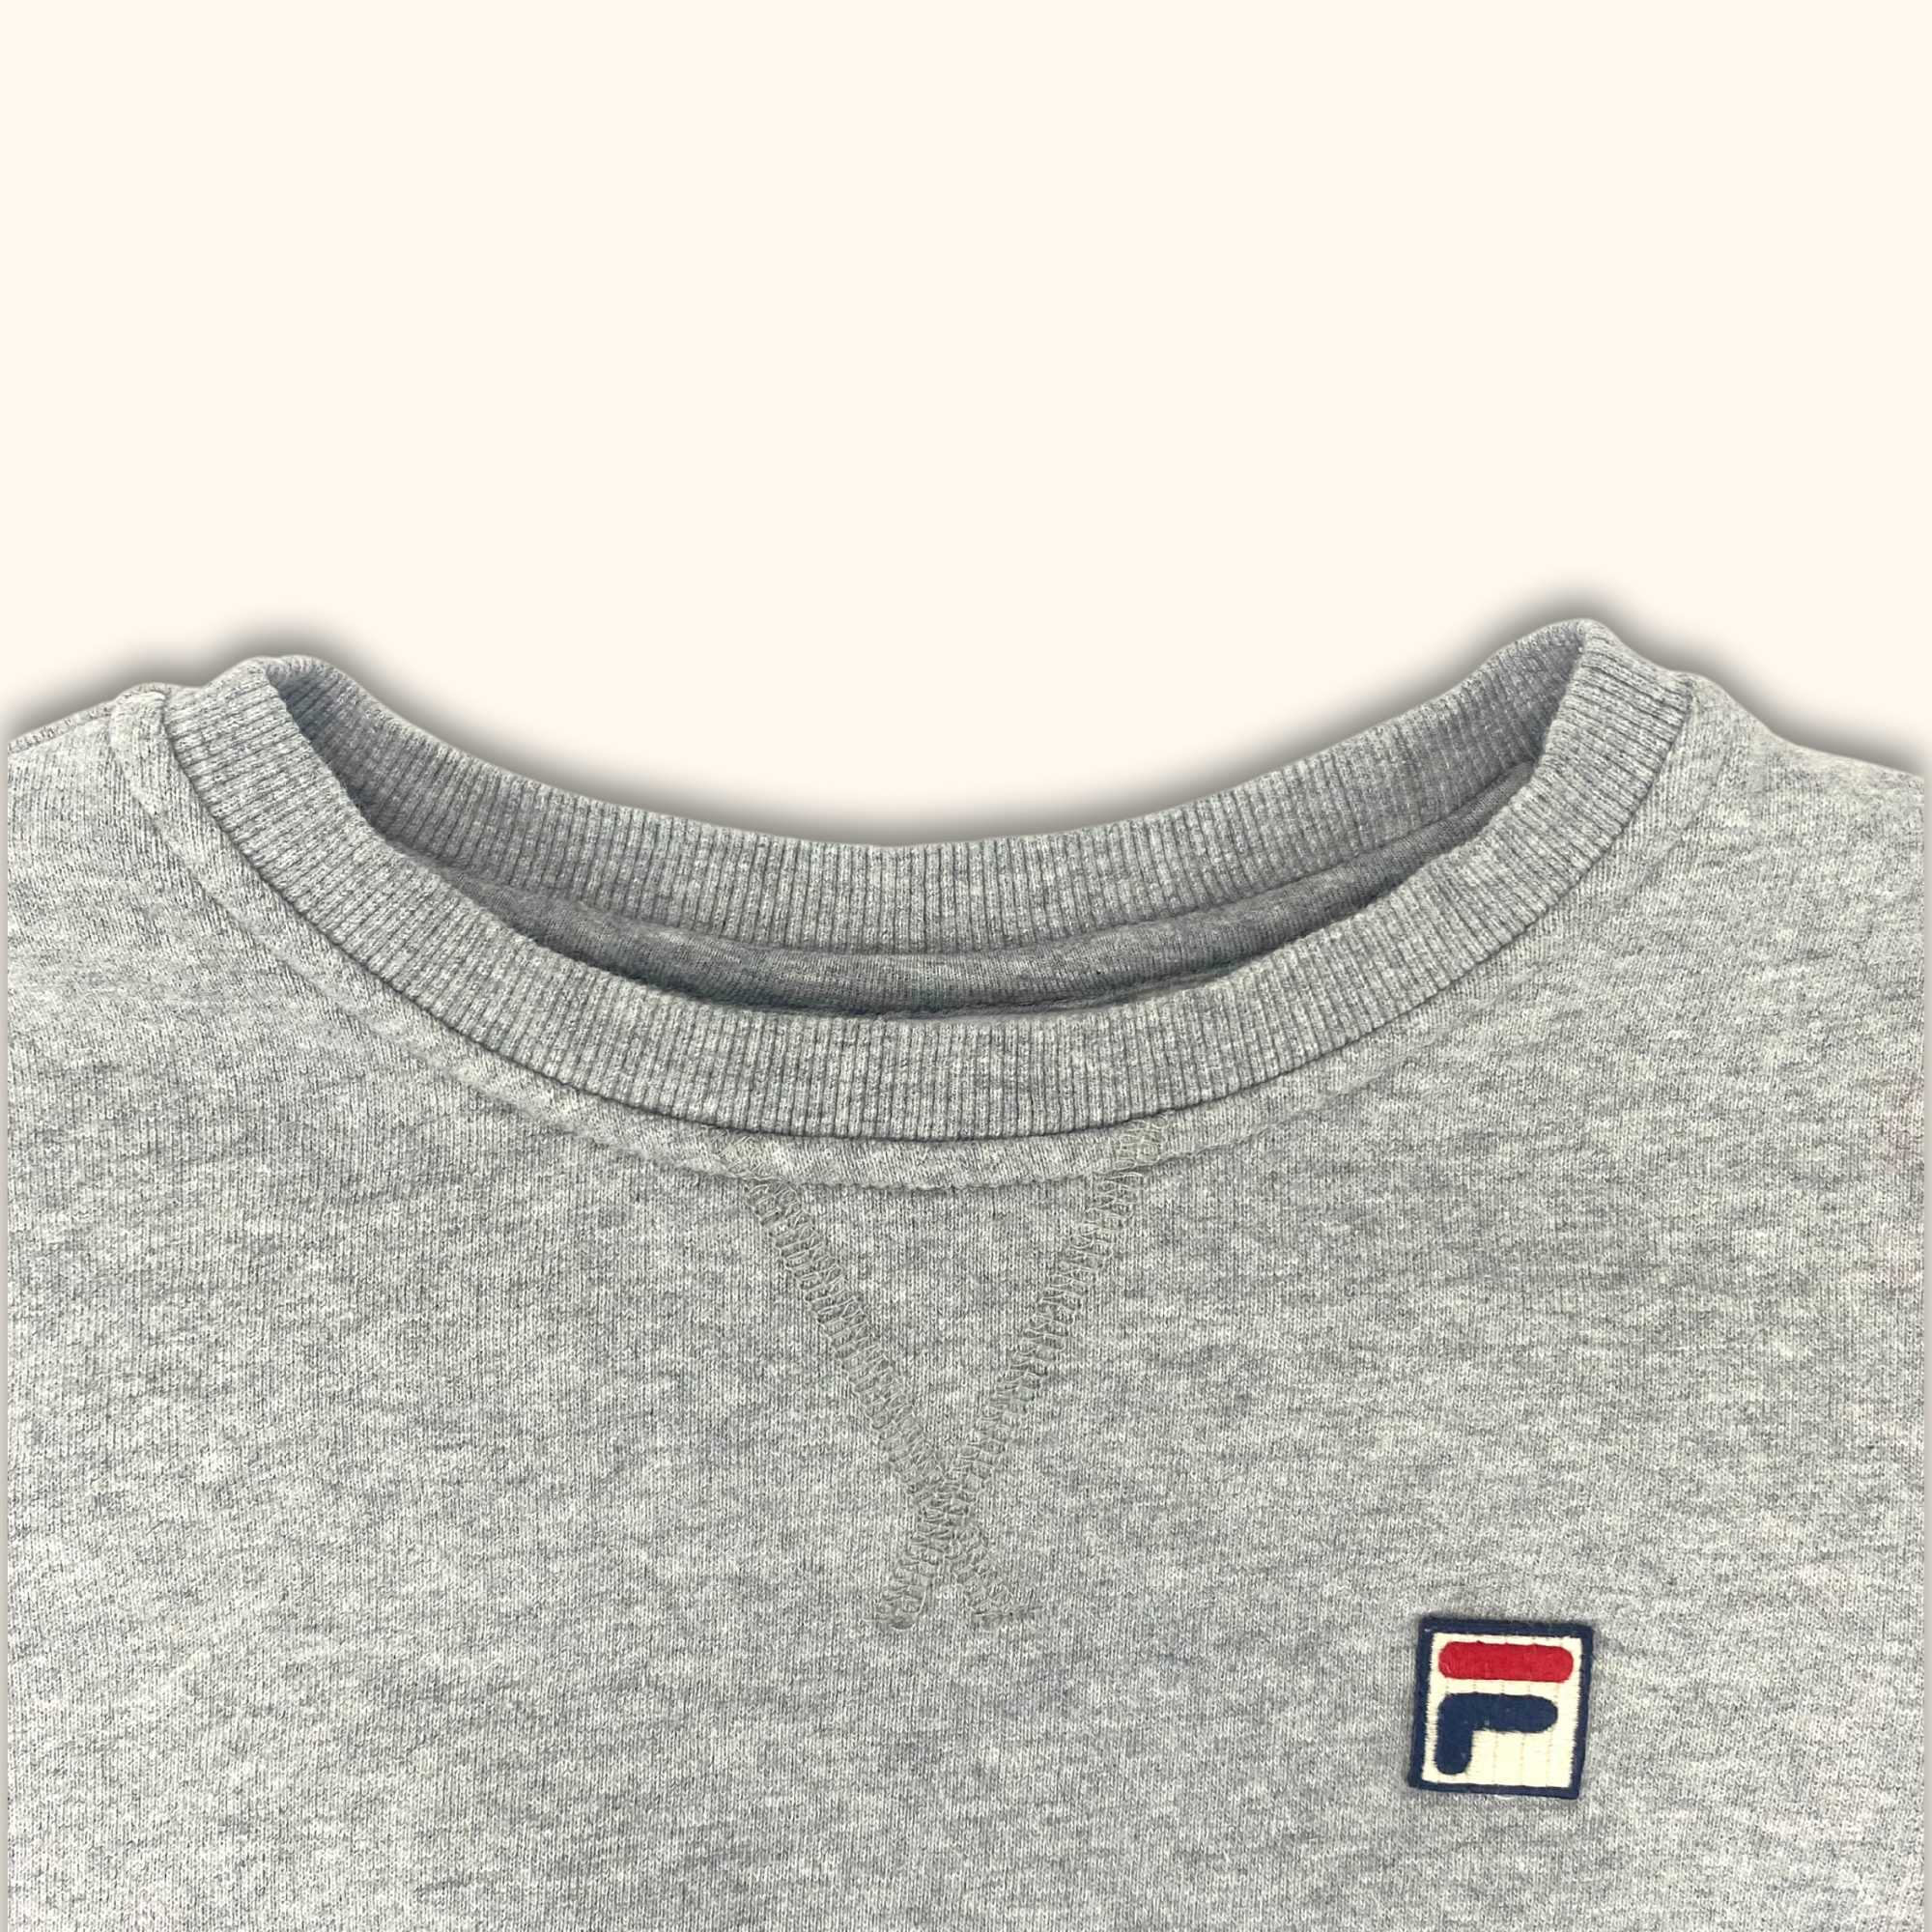 Fila Grey Long Sleeve Sweatshirt - Size Small - Fila - Jumpers